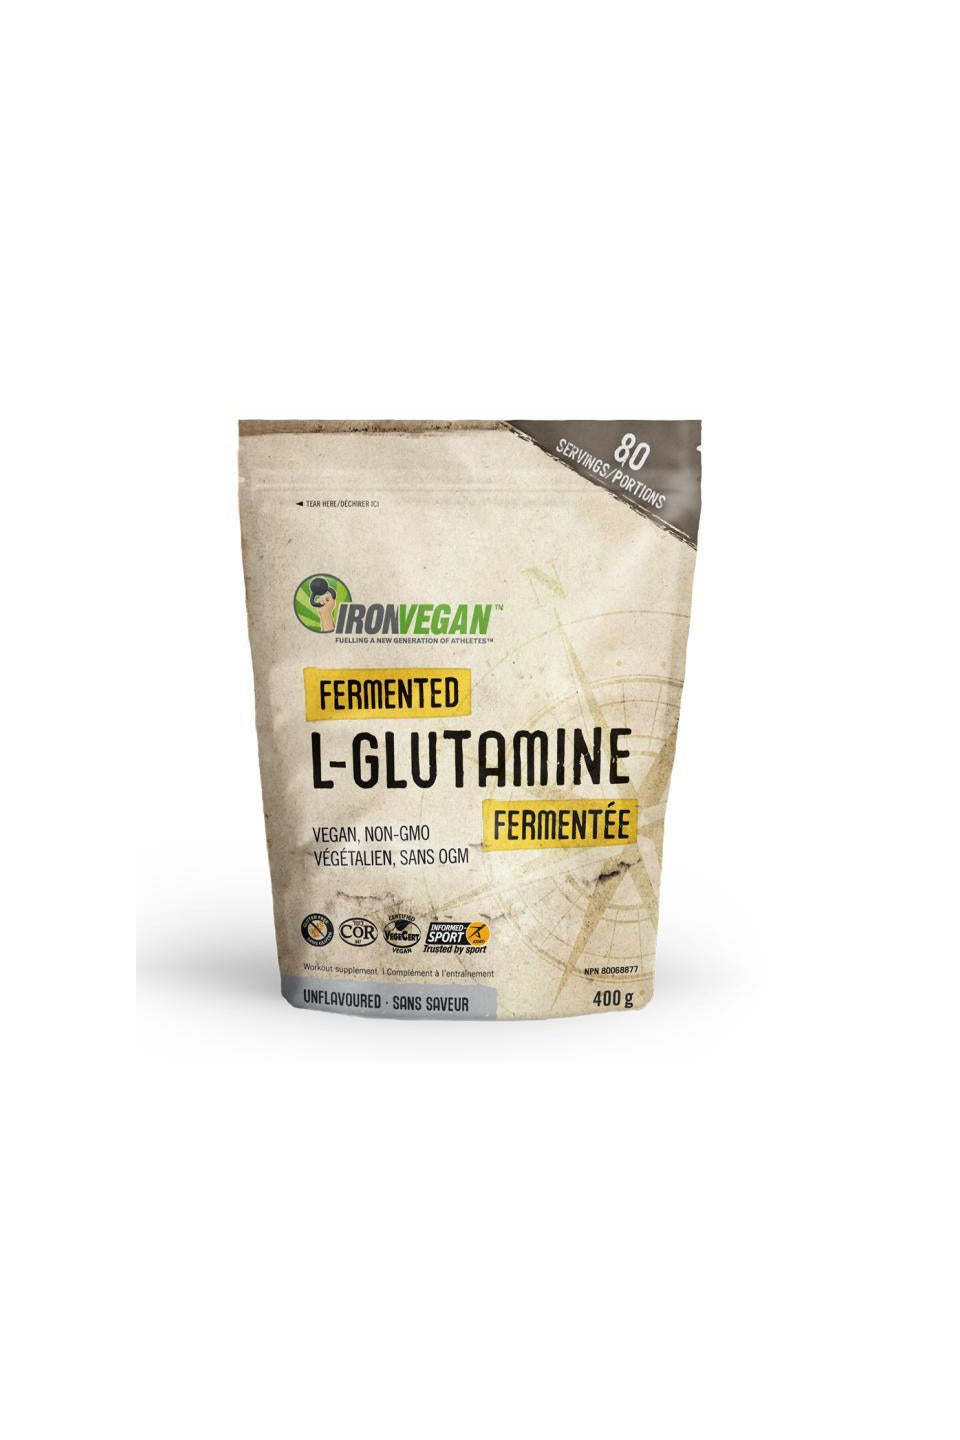 Iron Vegan Fermented L-Glutamine 400g